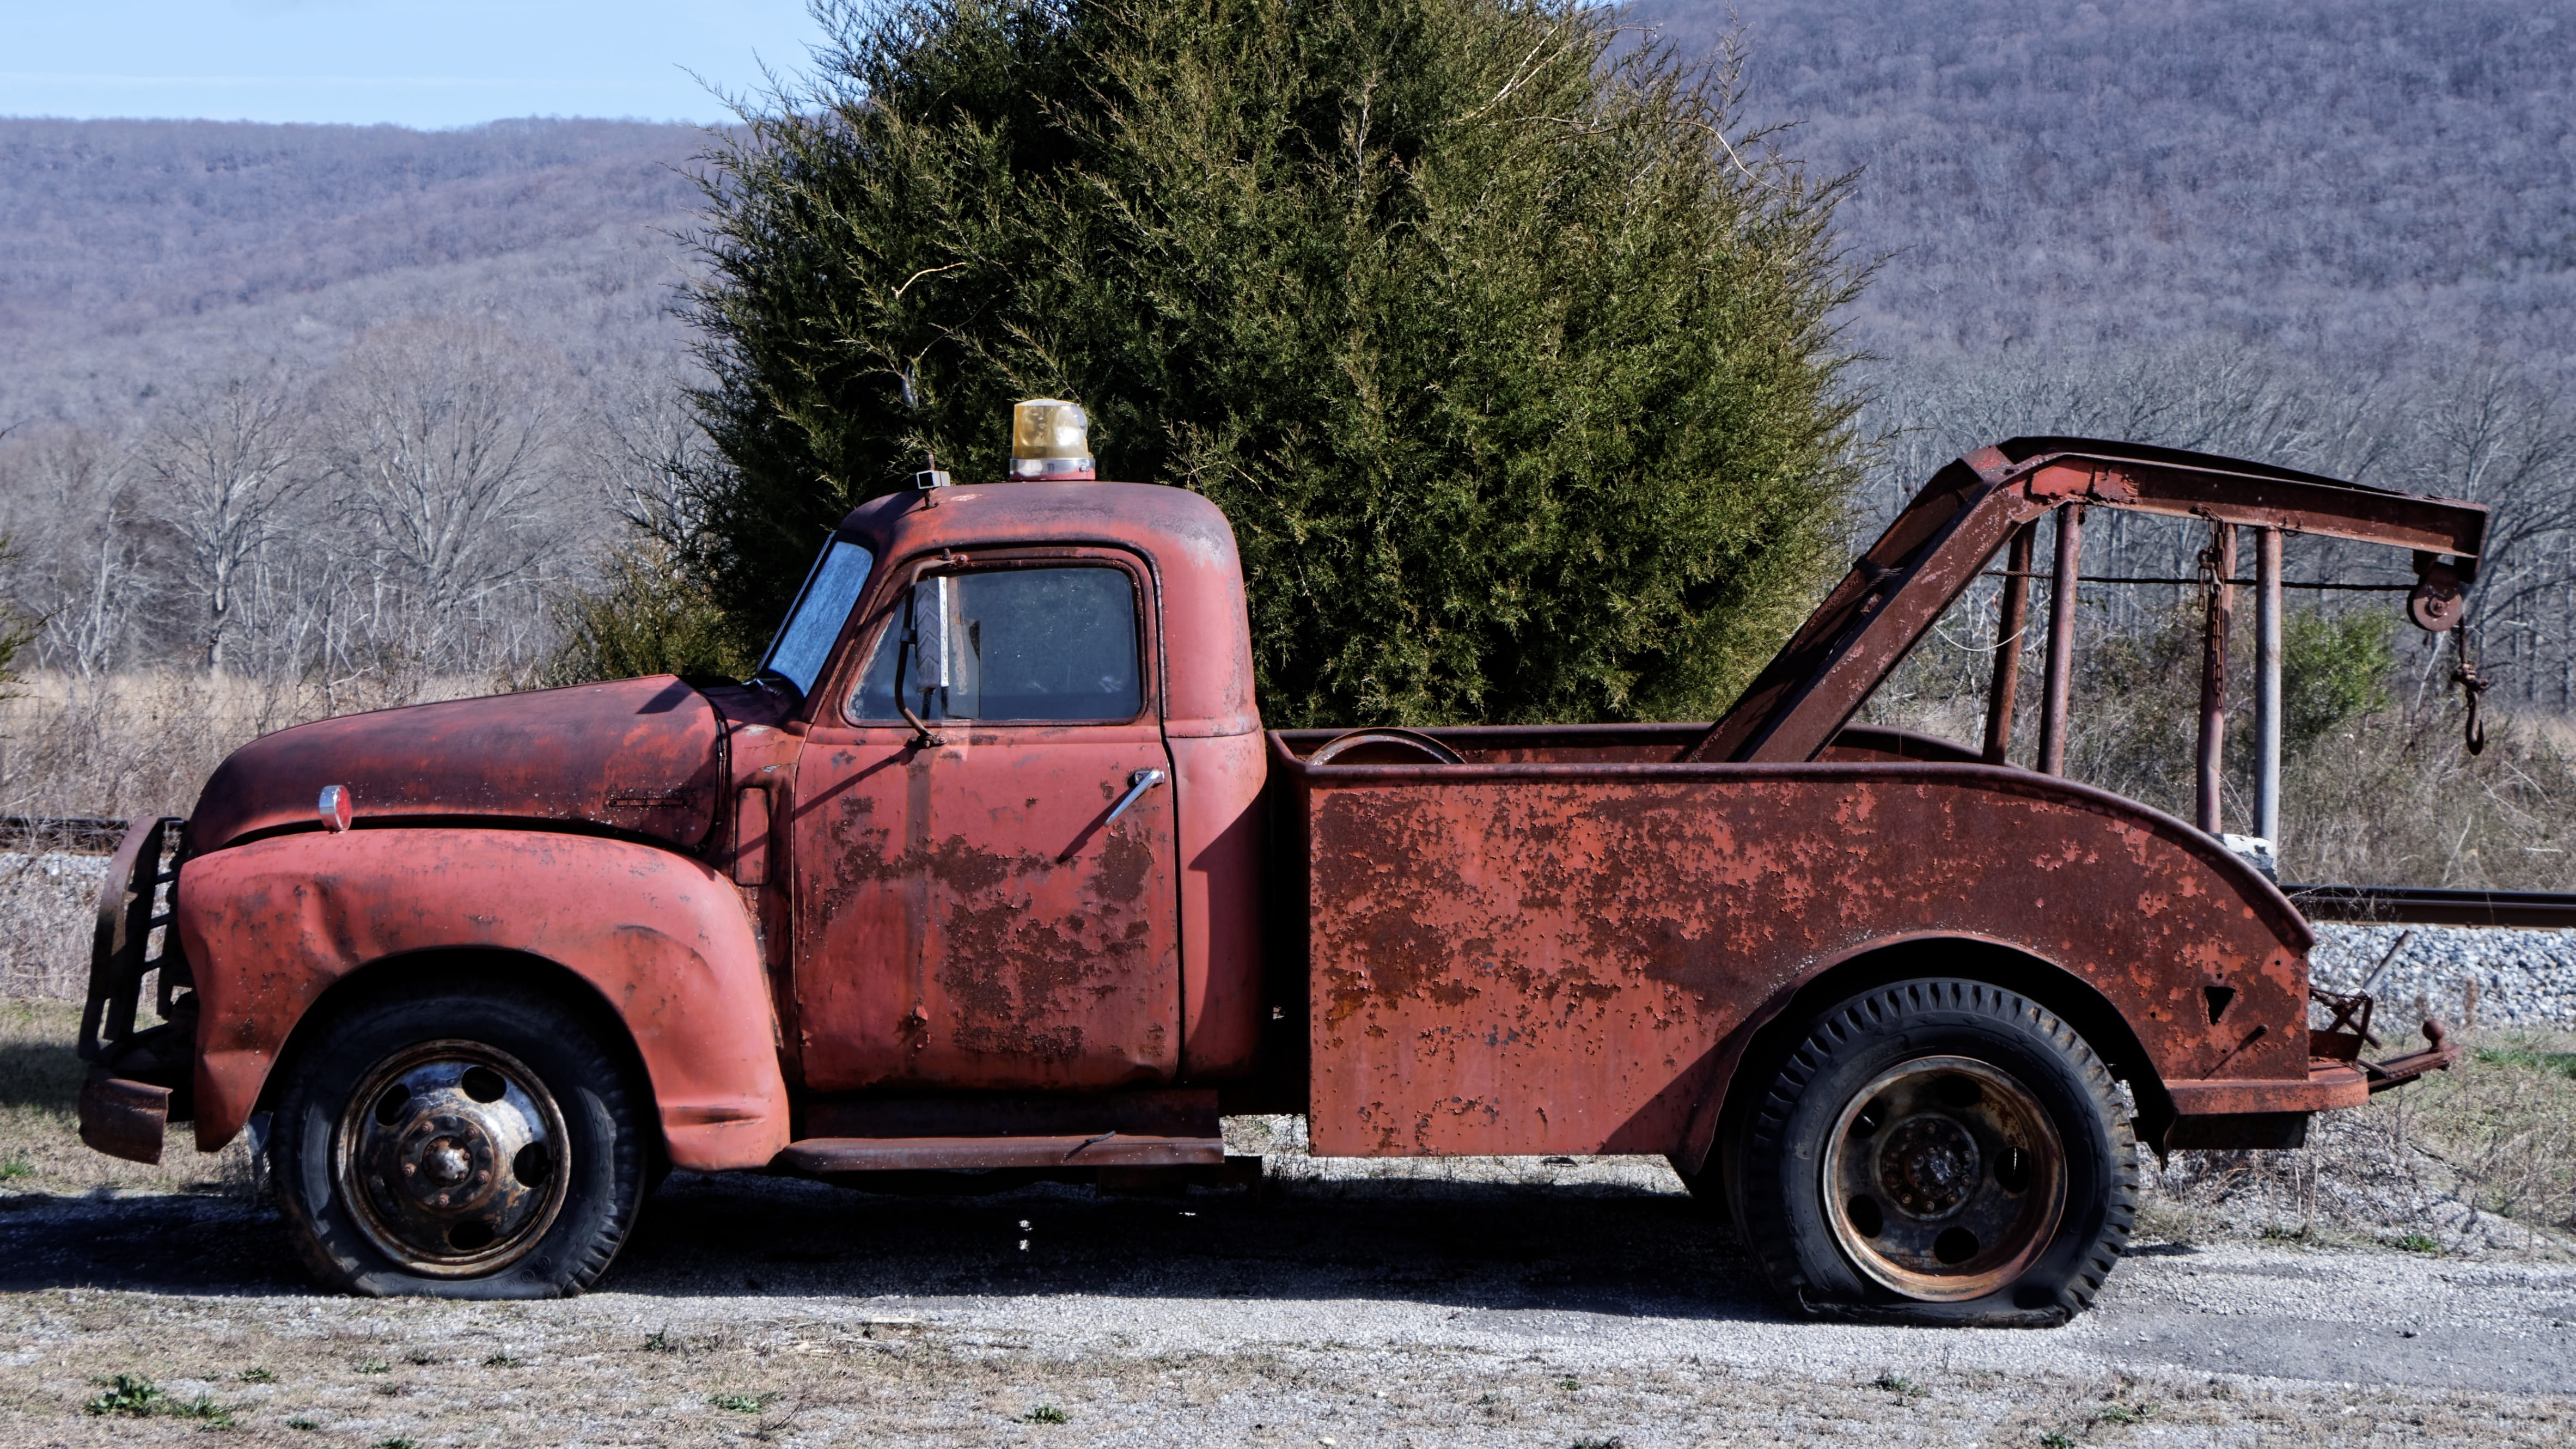 Wrecker, Tow Truck, Antique, Old, vehicle, emergency, breakdown